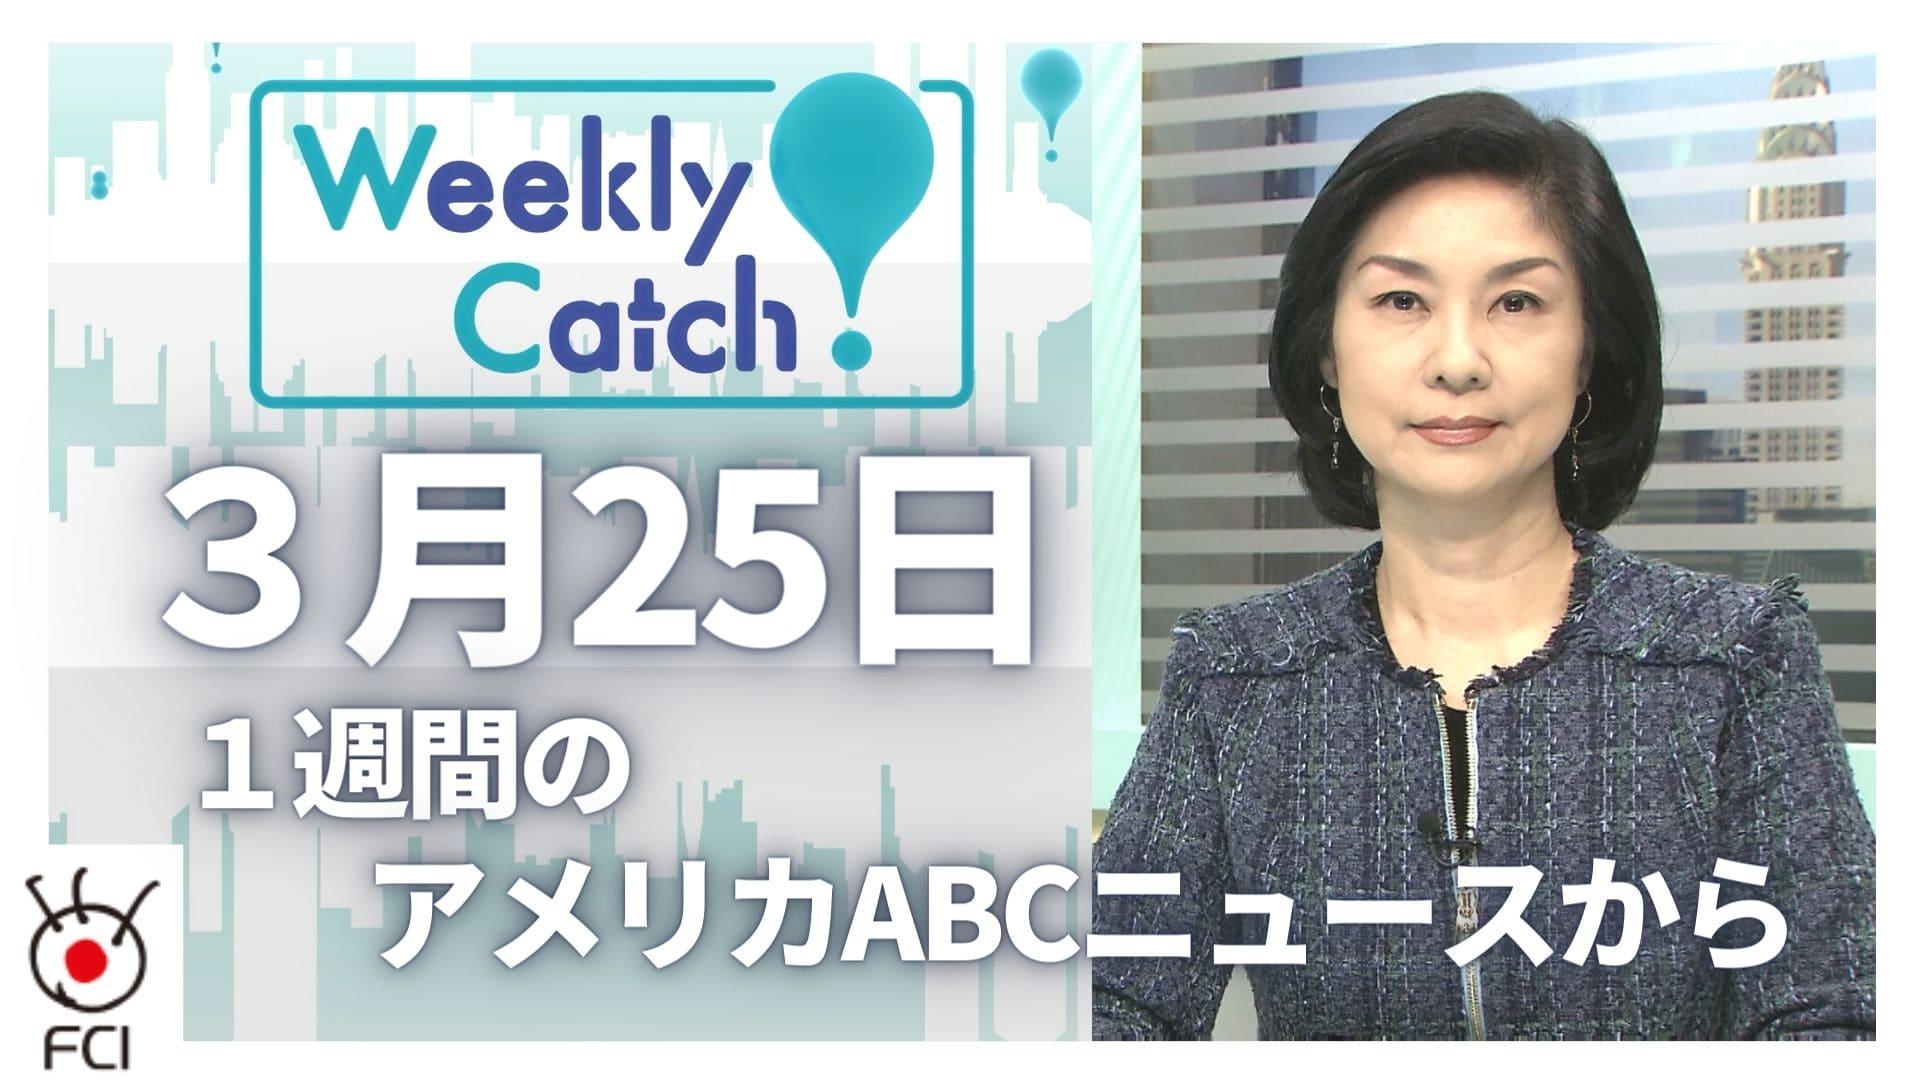 3月25日 Weekly Catch!